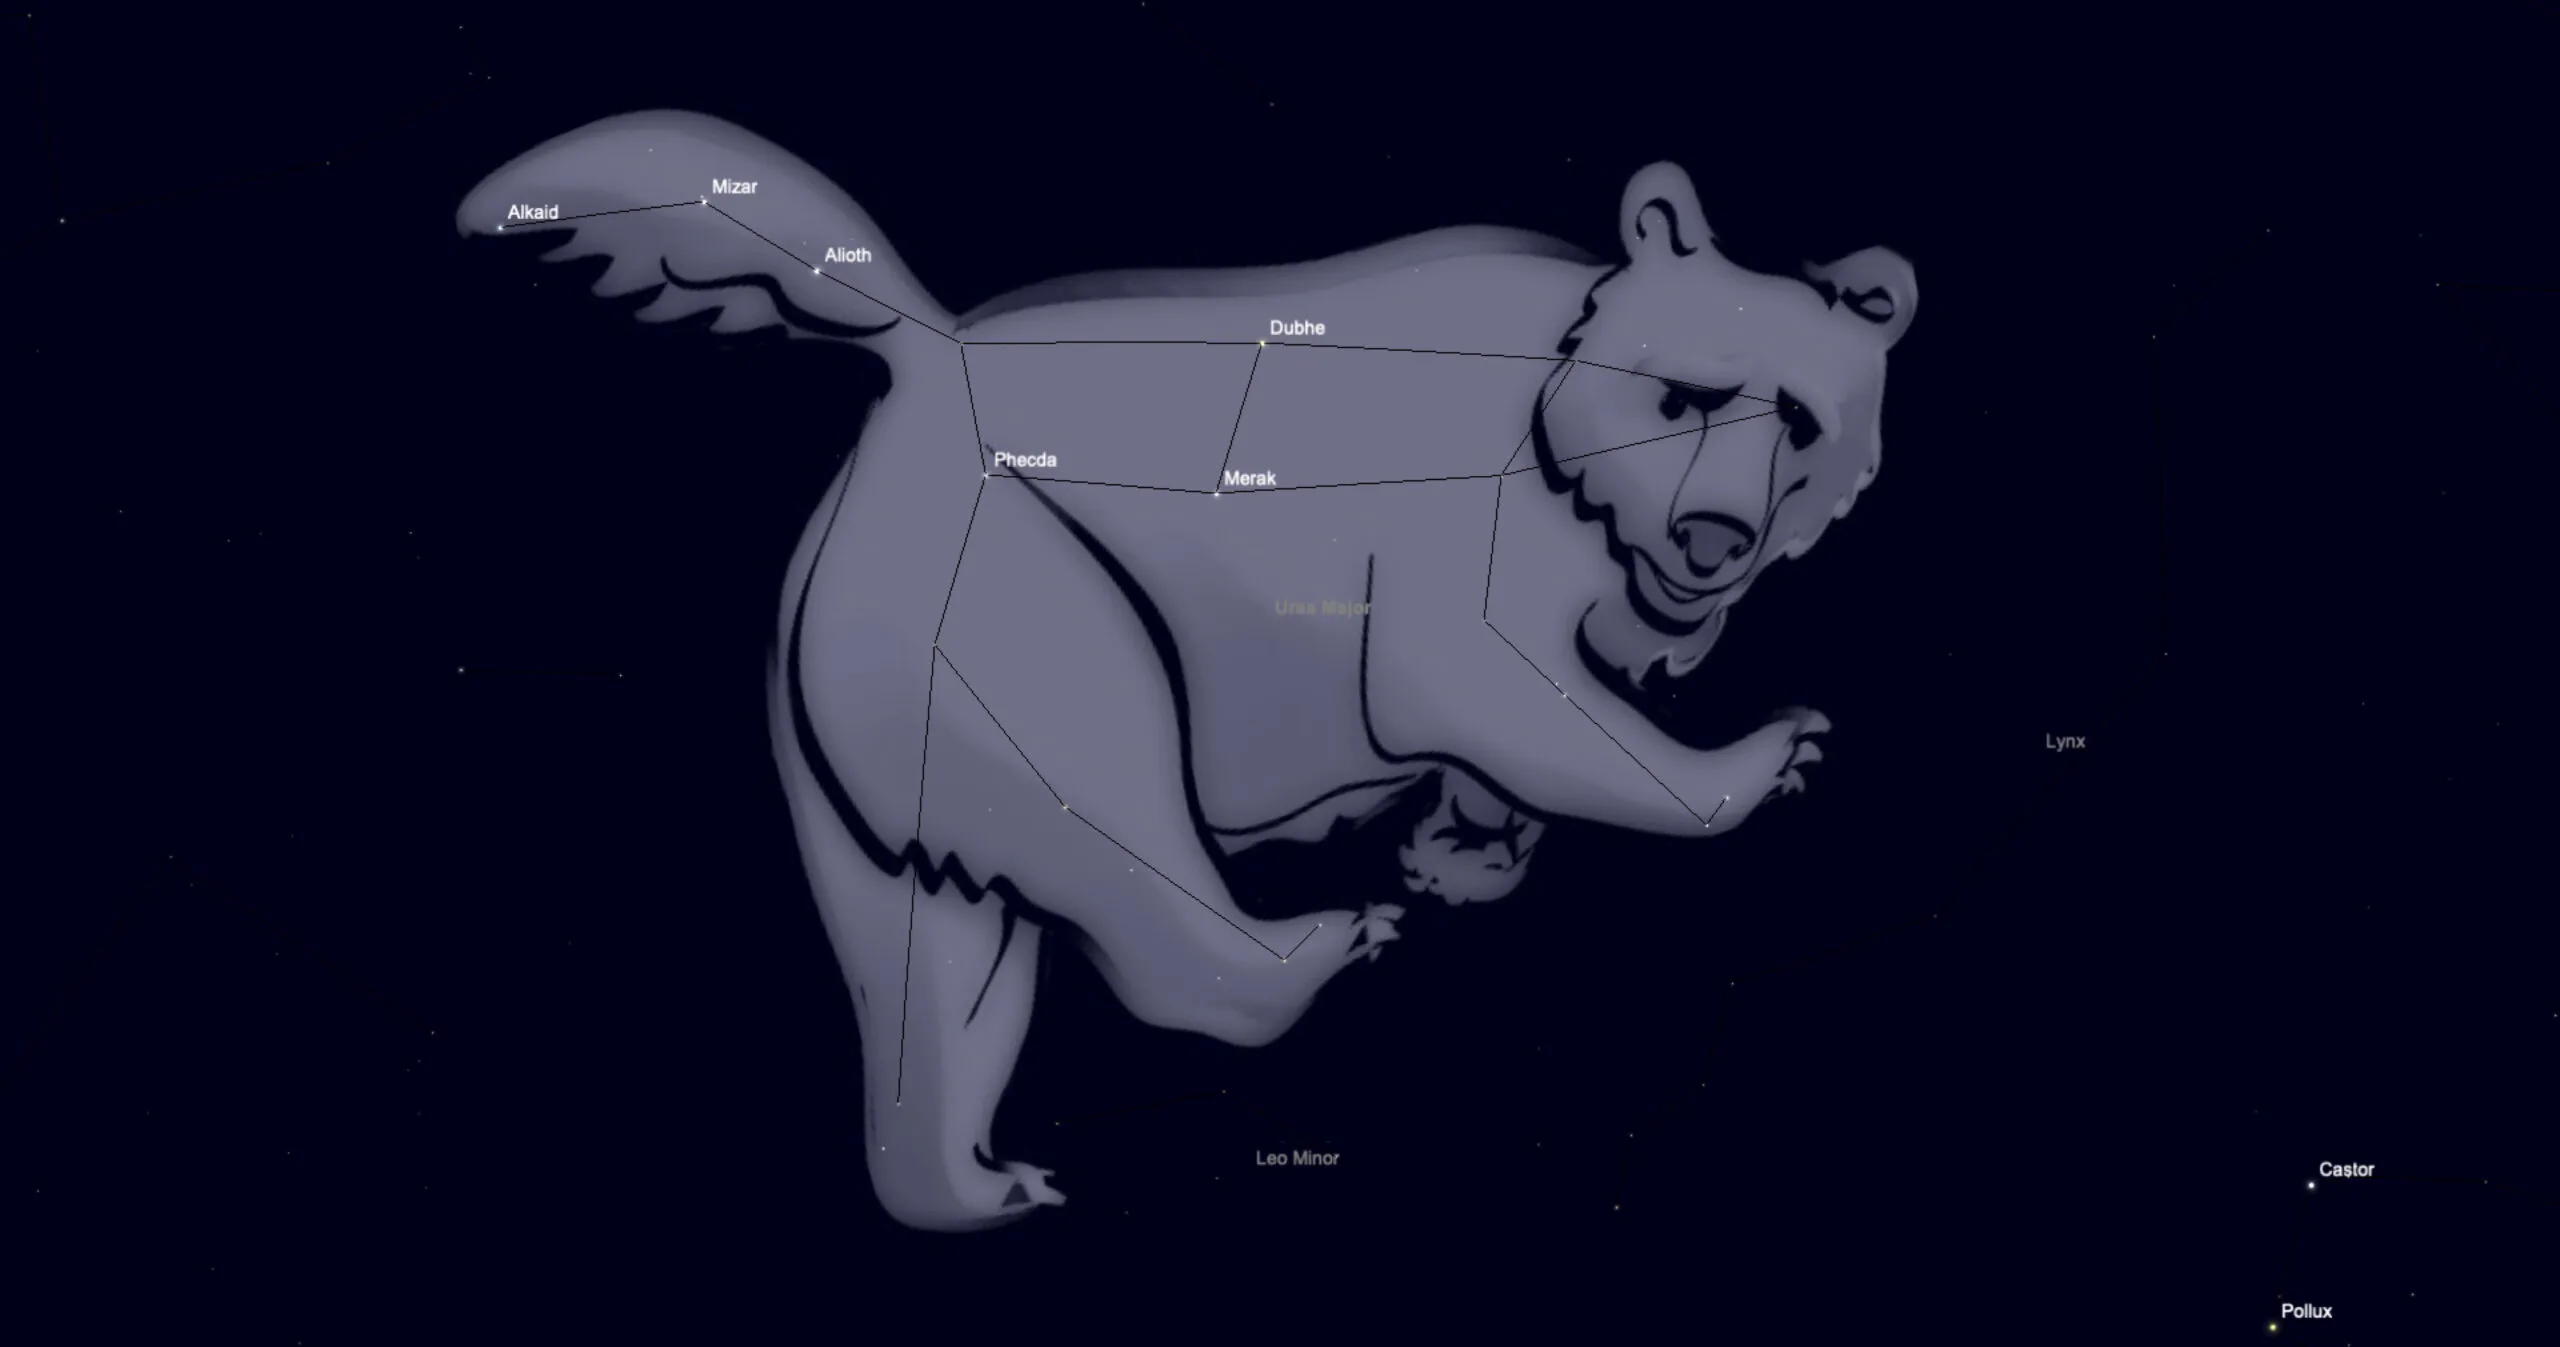 Ursa Major Constellation – The Great Bear of the Night Sky